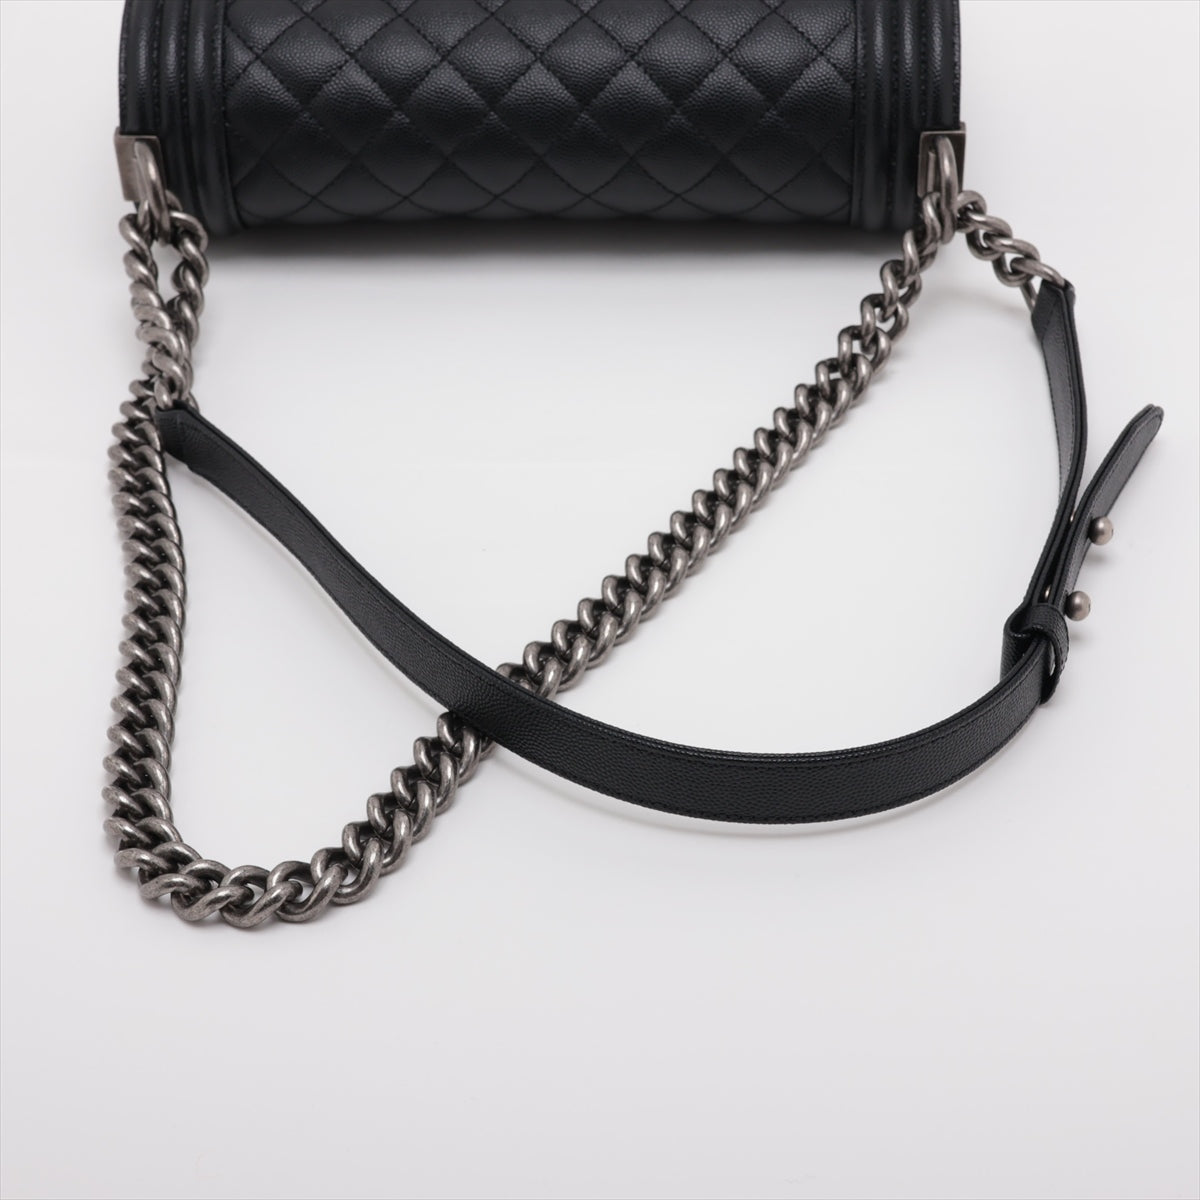 Chanel BOY CHANEL 25 Caviar Skin Chain Shoulder Bag Black Silver Metal Fittings A67086